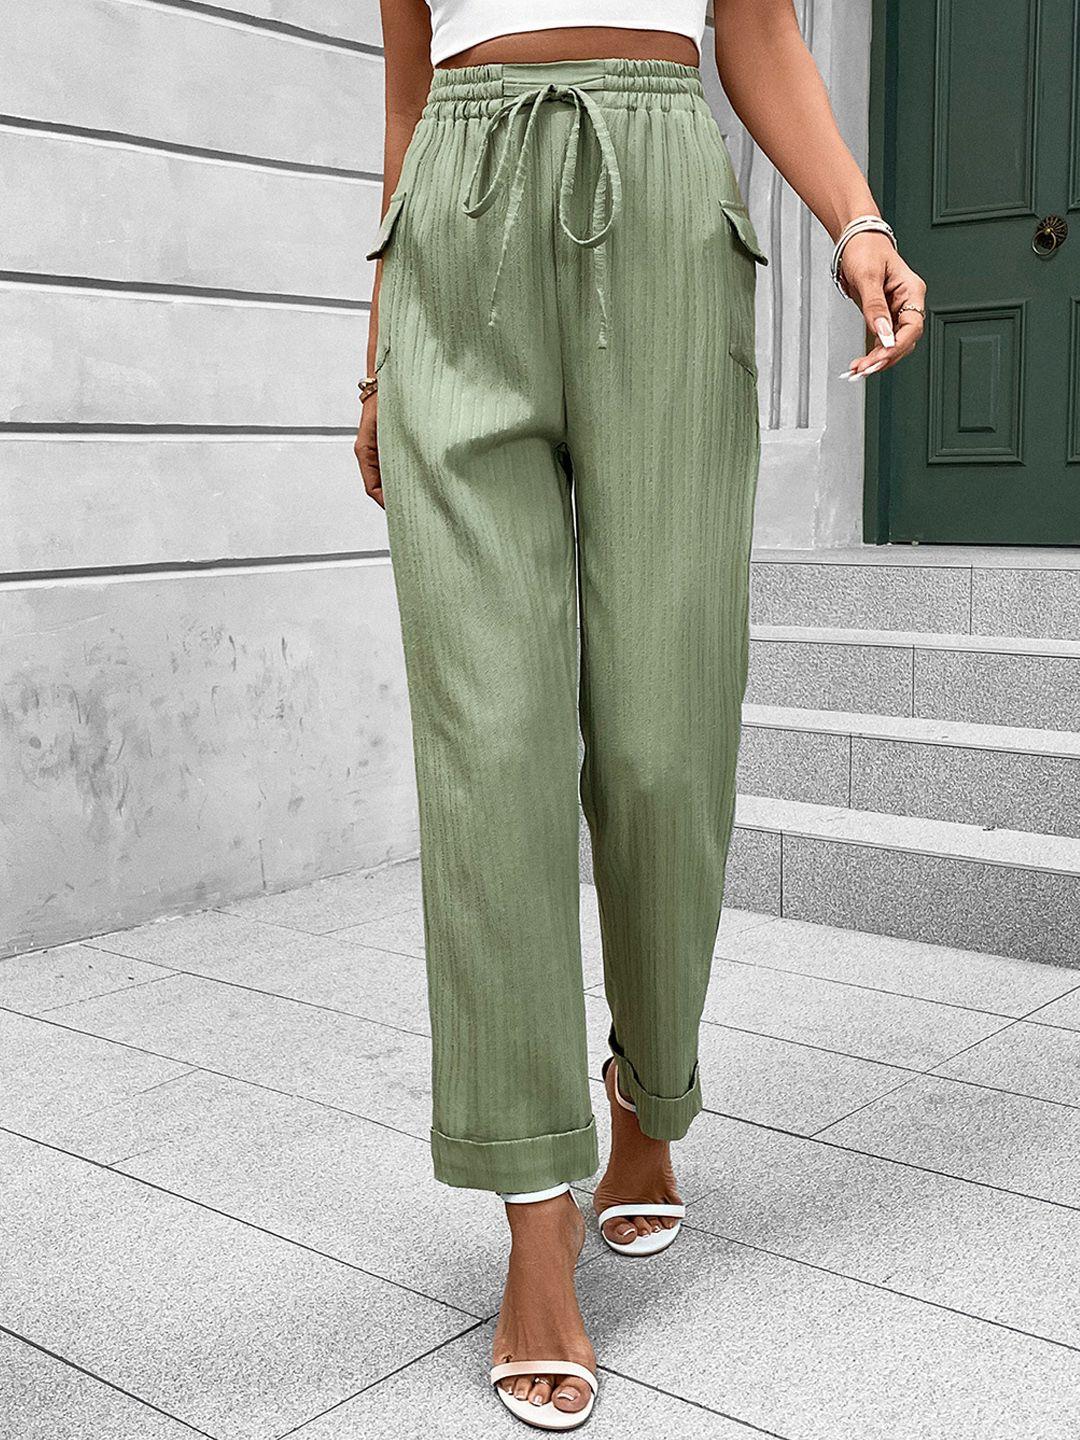 stylecast women green high-rise trousers